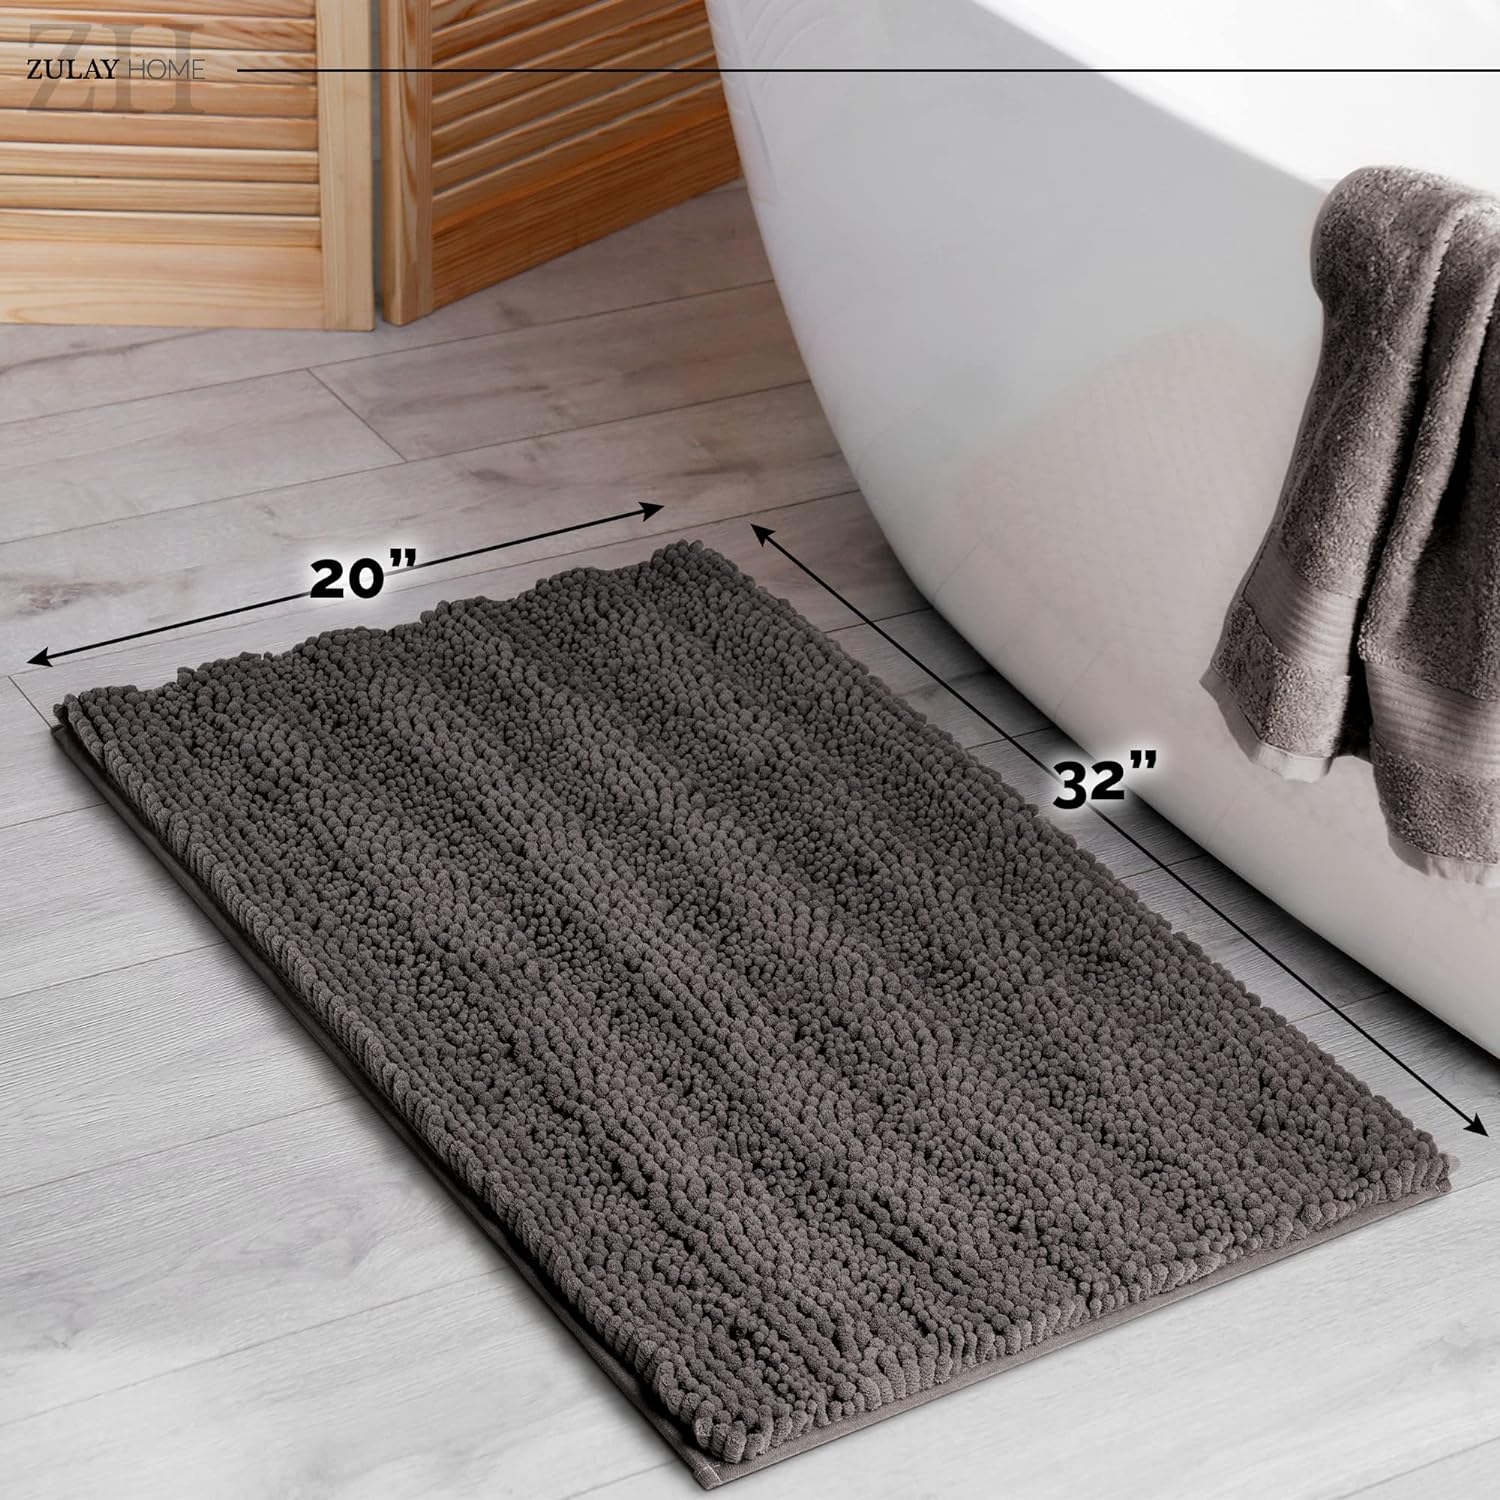 Zulay Kitchen Soft Shaggy Bathroom Rug, 20 x 32 Stone Grey